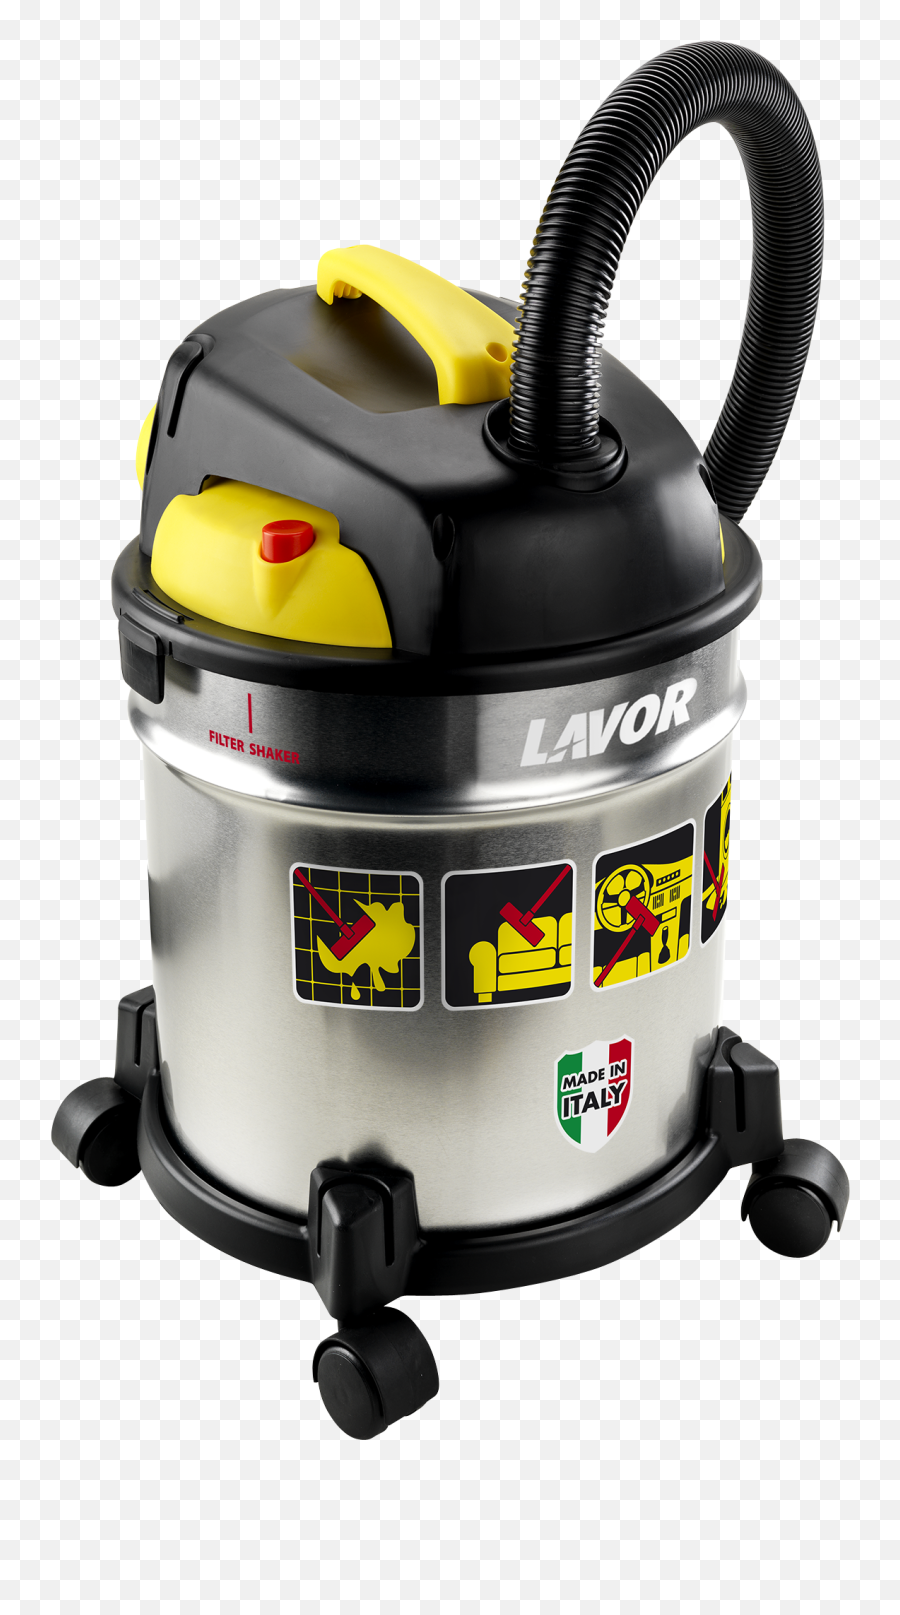 Lavor Vac 20 S - Lavor Vacuum Cleaner Png,Vacuum Png